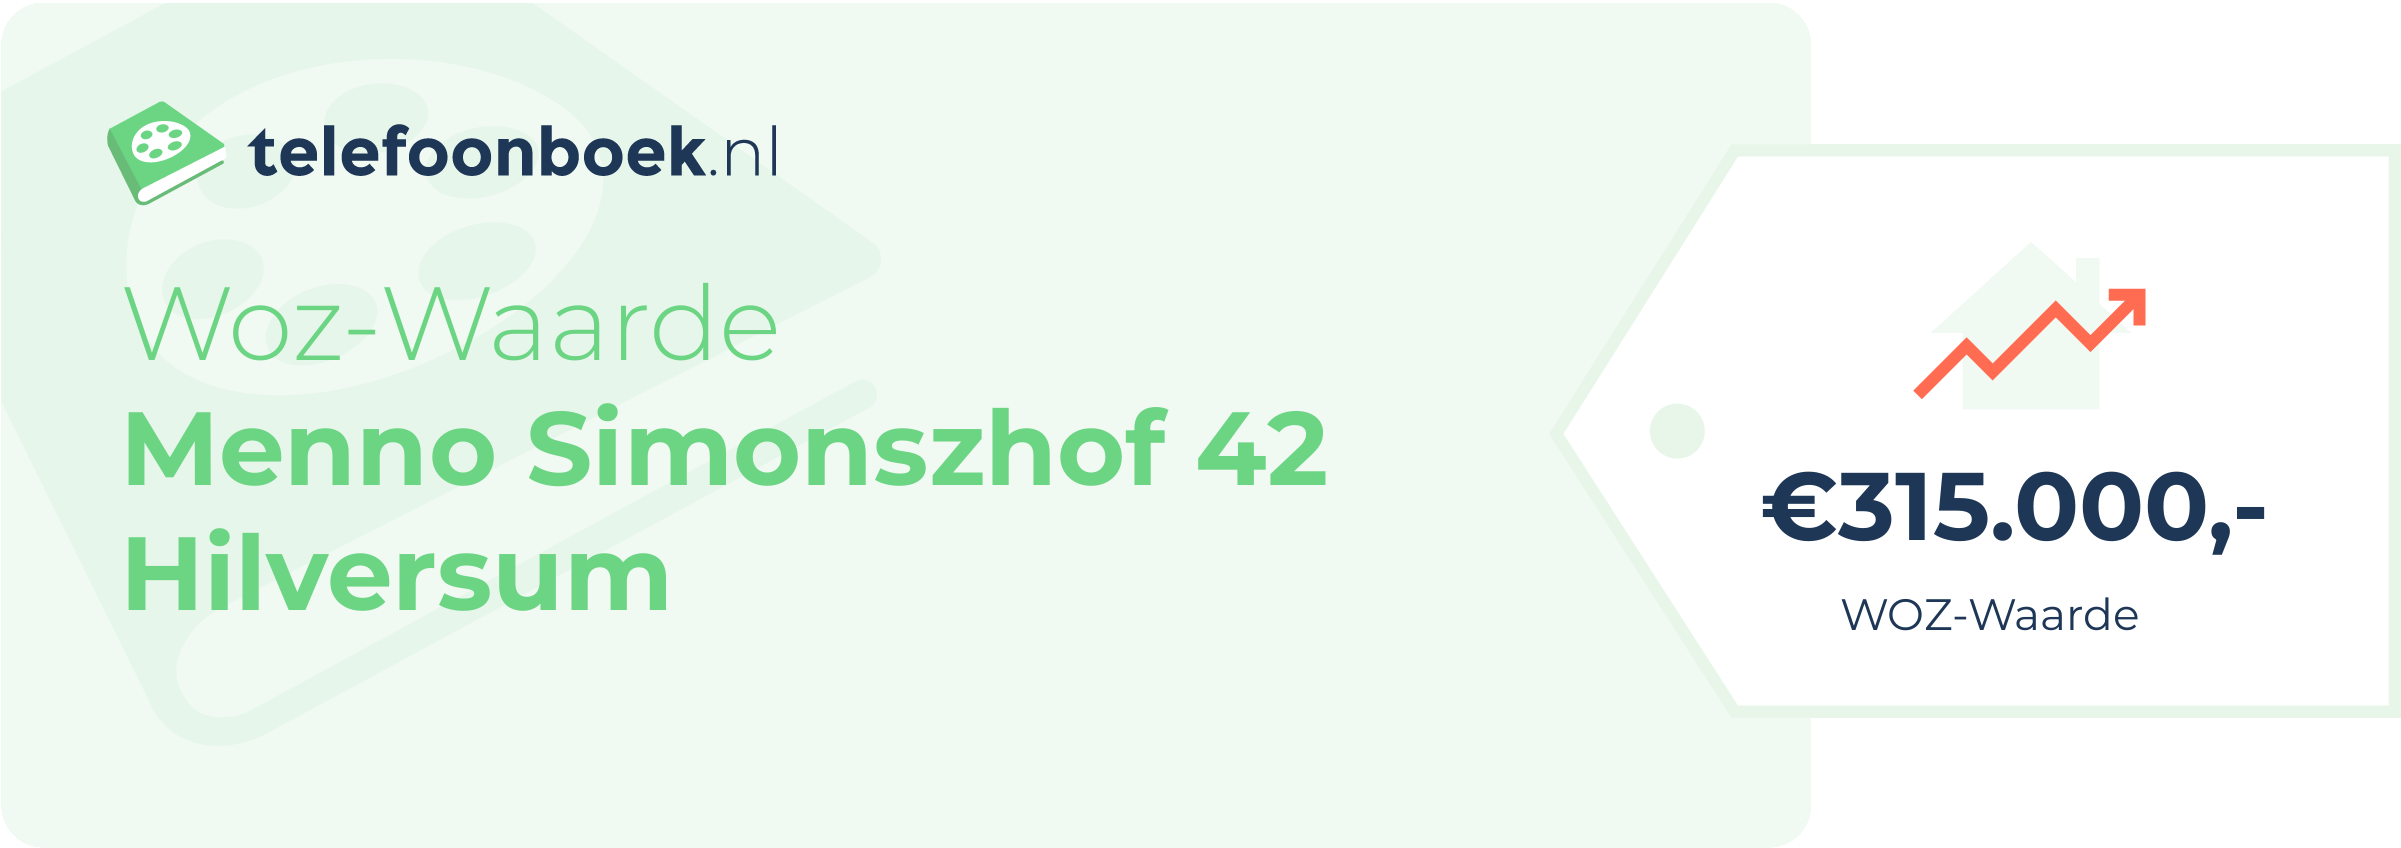 WOZ-waarde Menno Simonszhof 42 Hilversum